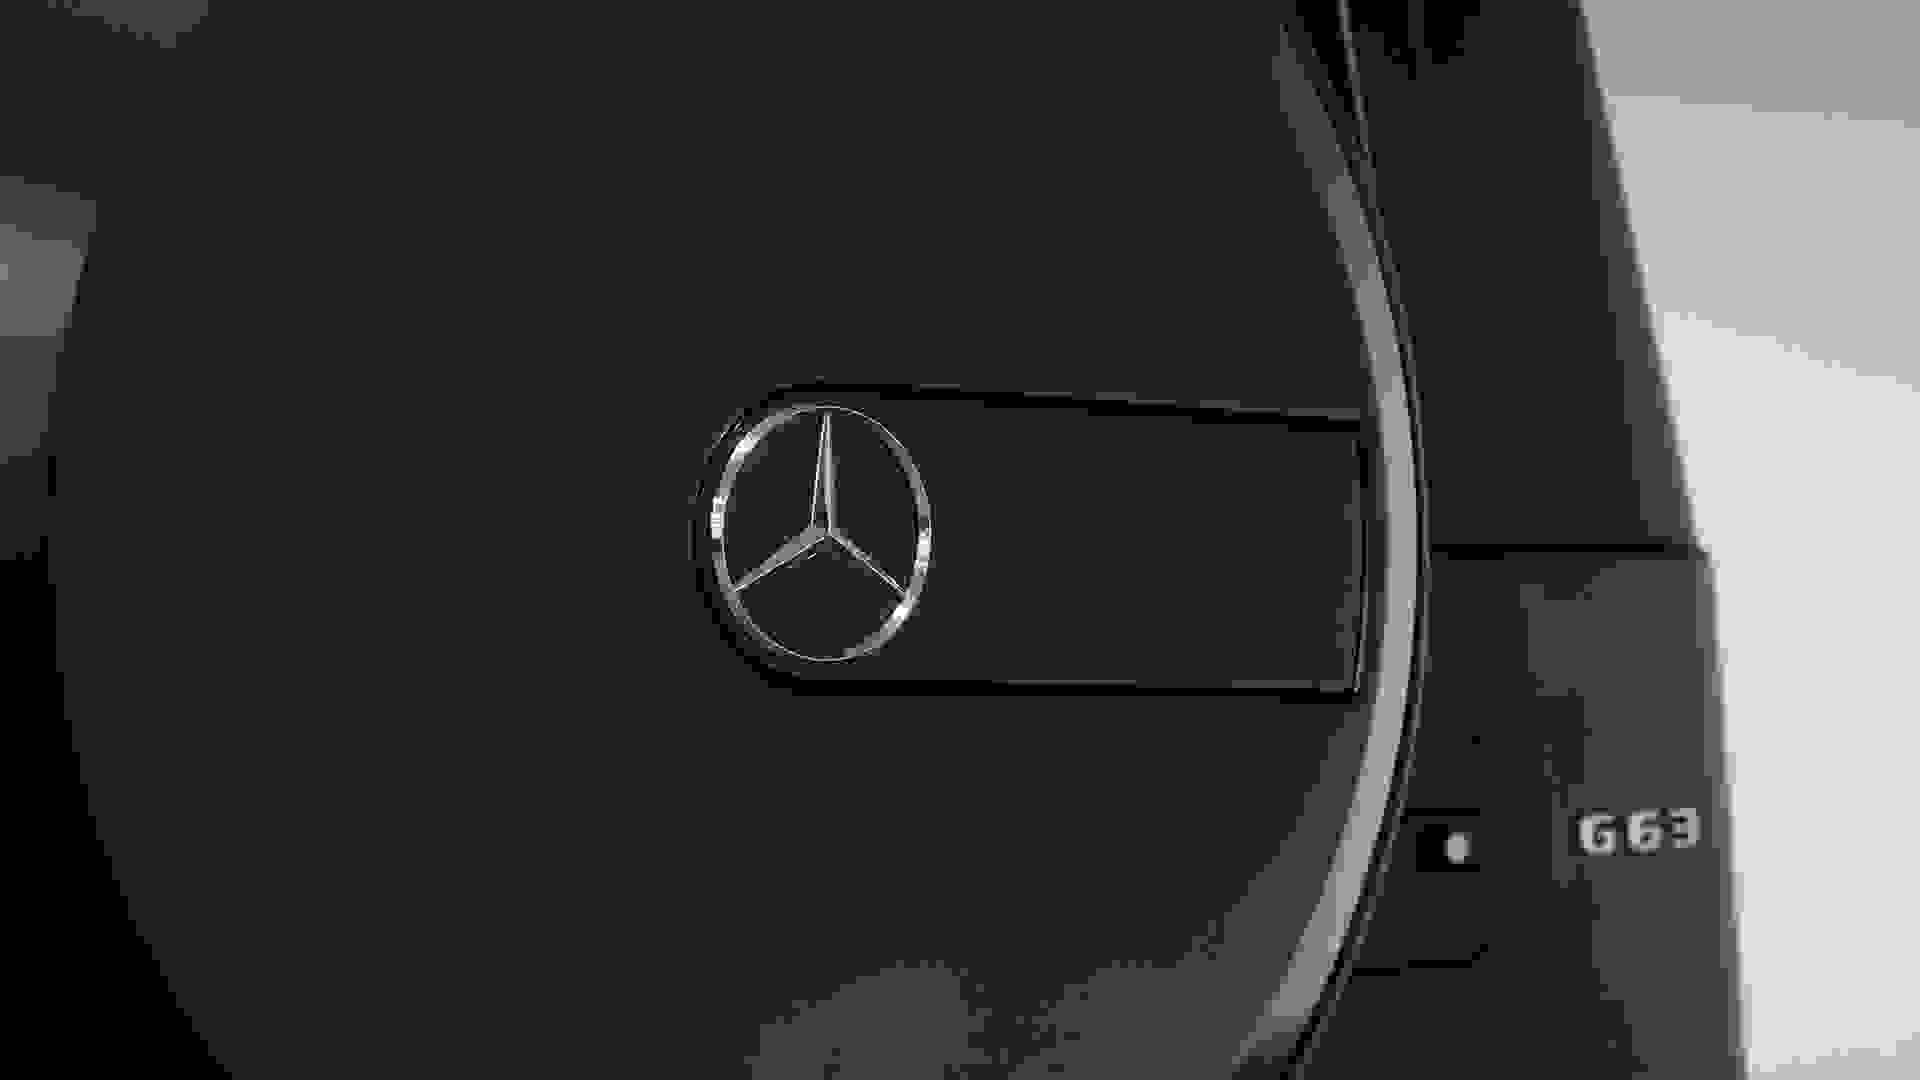 Mercedes-Benz G63 AMG Photo 36e4147a-cb68-456f-8571-7008f07cd11e.jpg